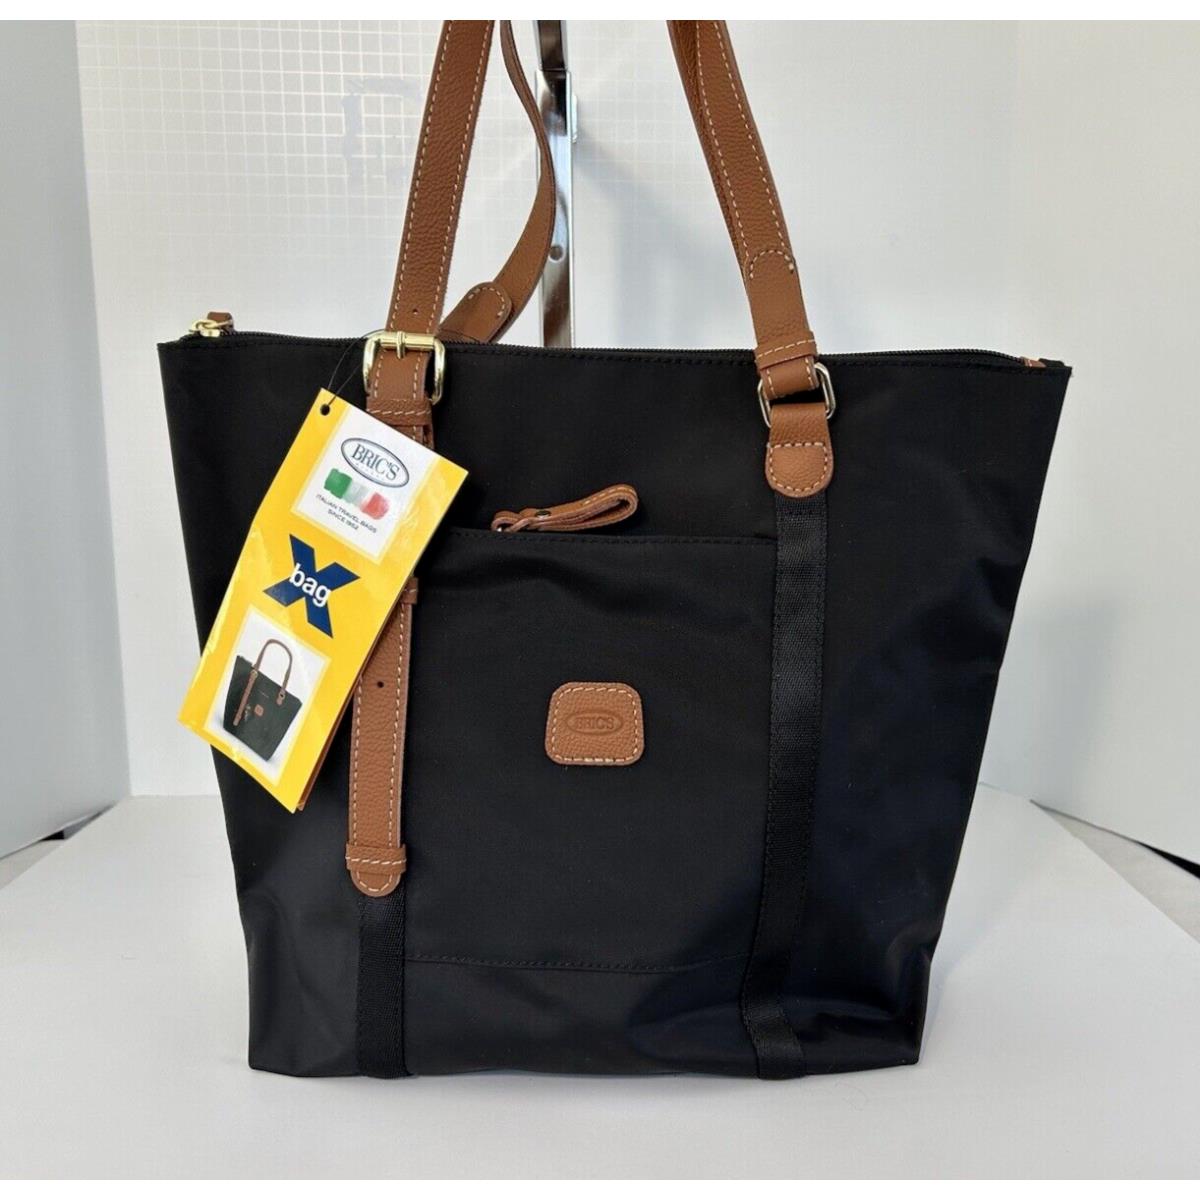 Bric`s Bric`s Medium Tote 3 in 1 Bag Shopper X-bag Travel Shoulder Crossbody